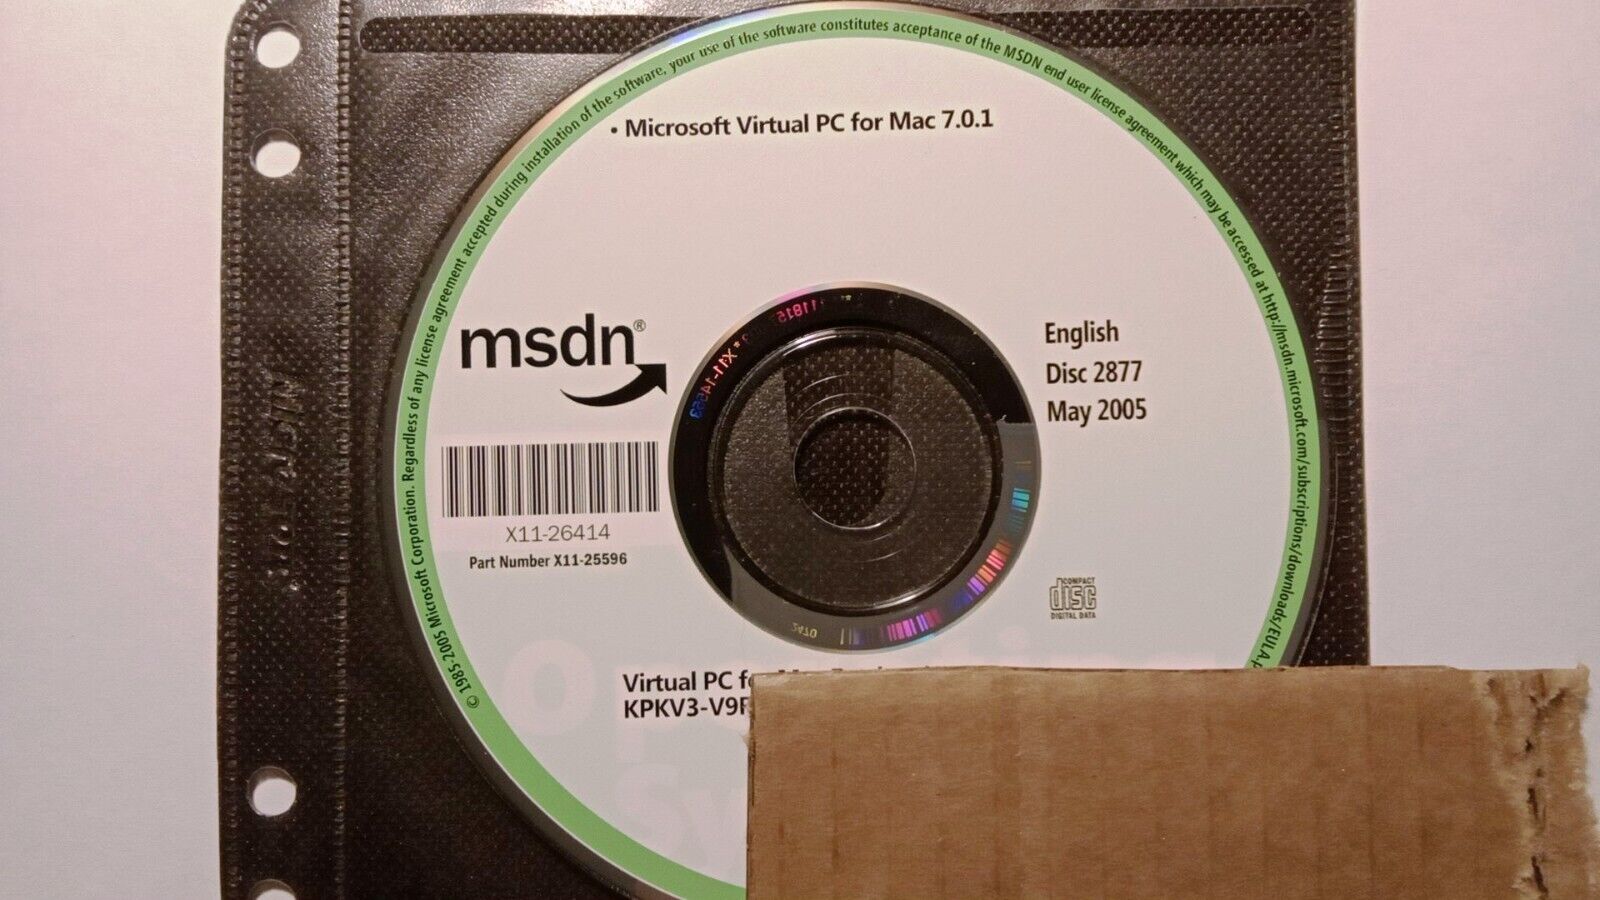 Microsoft Virtual PC for Mac 7.0.1 Full Version CD & License Key